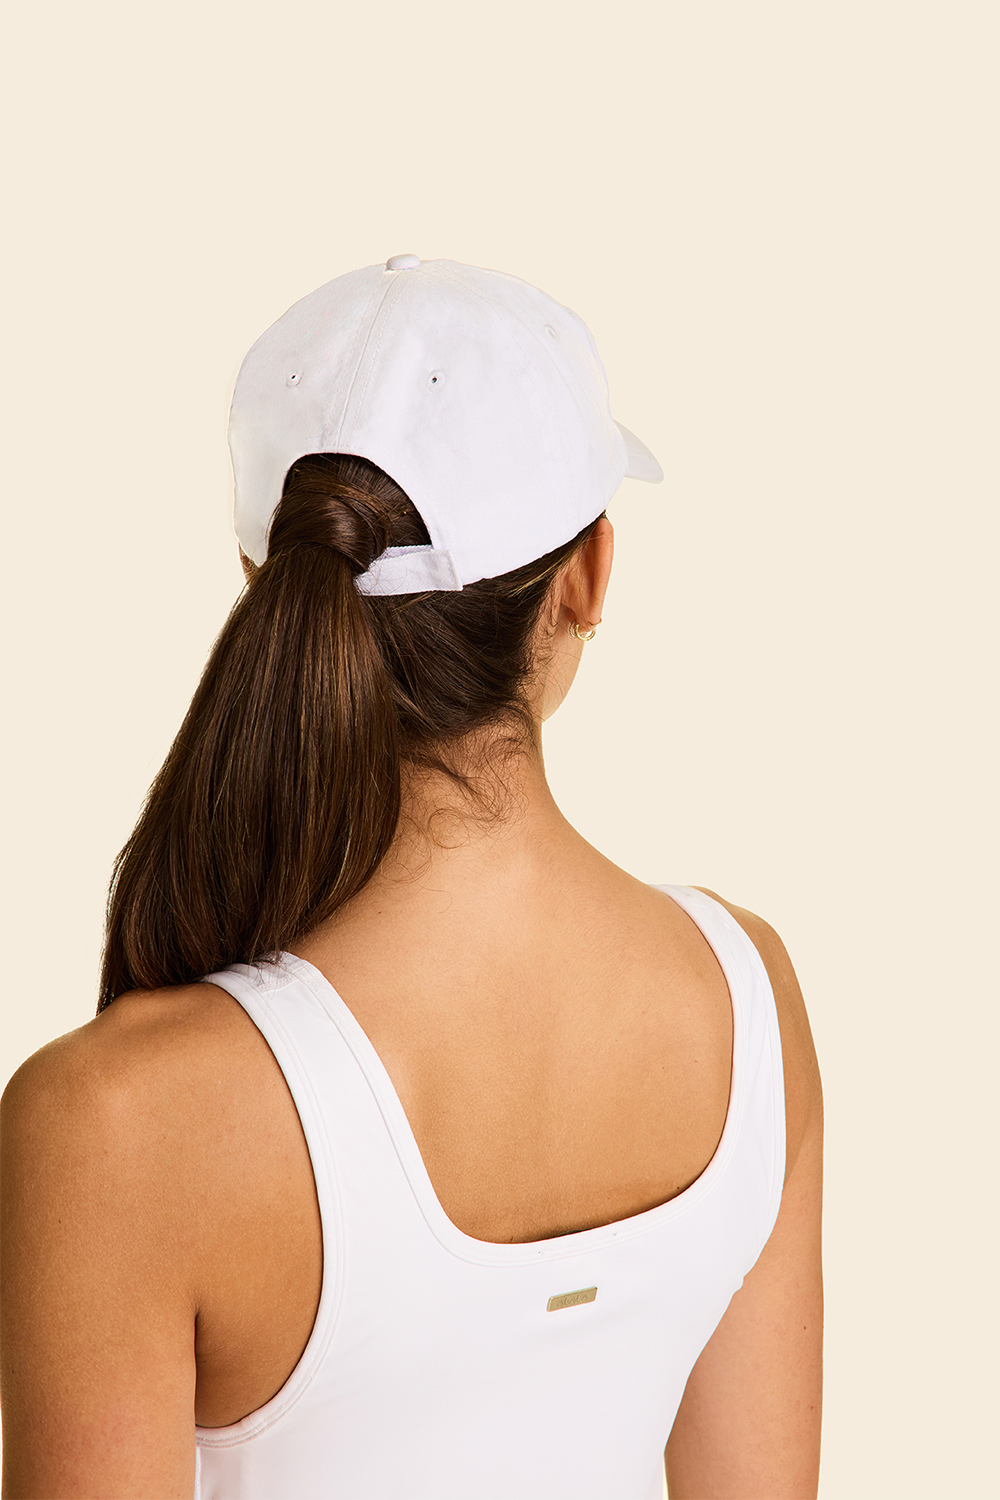 Women's baseball cap in white and navy